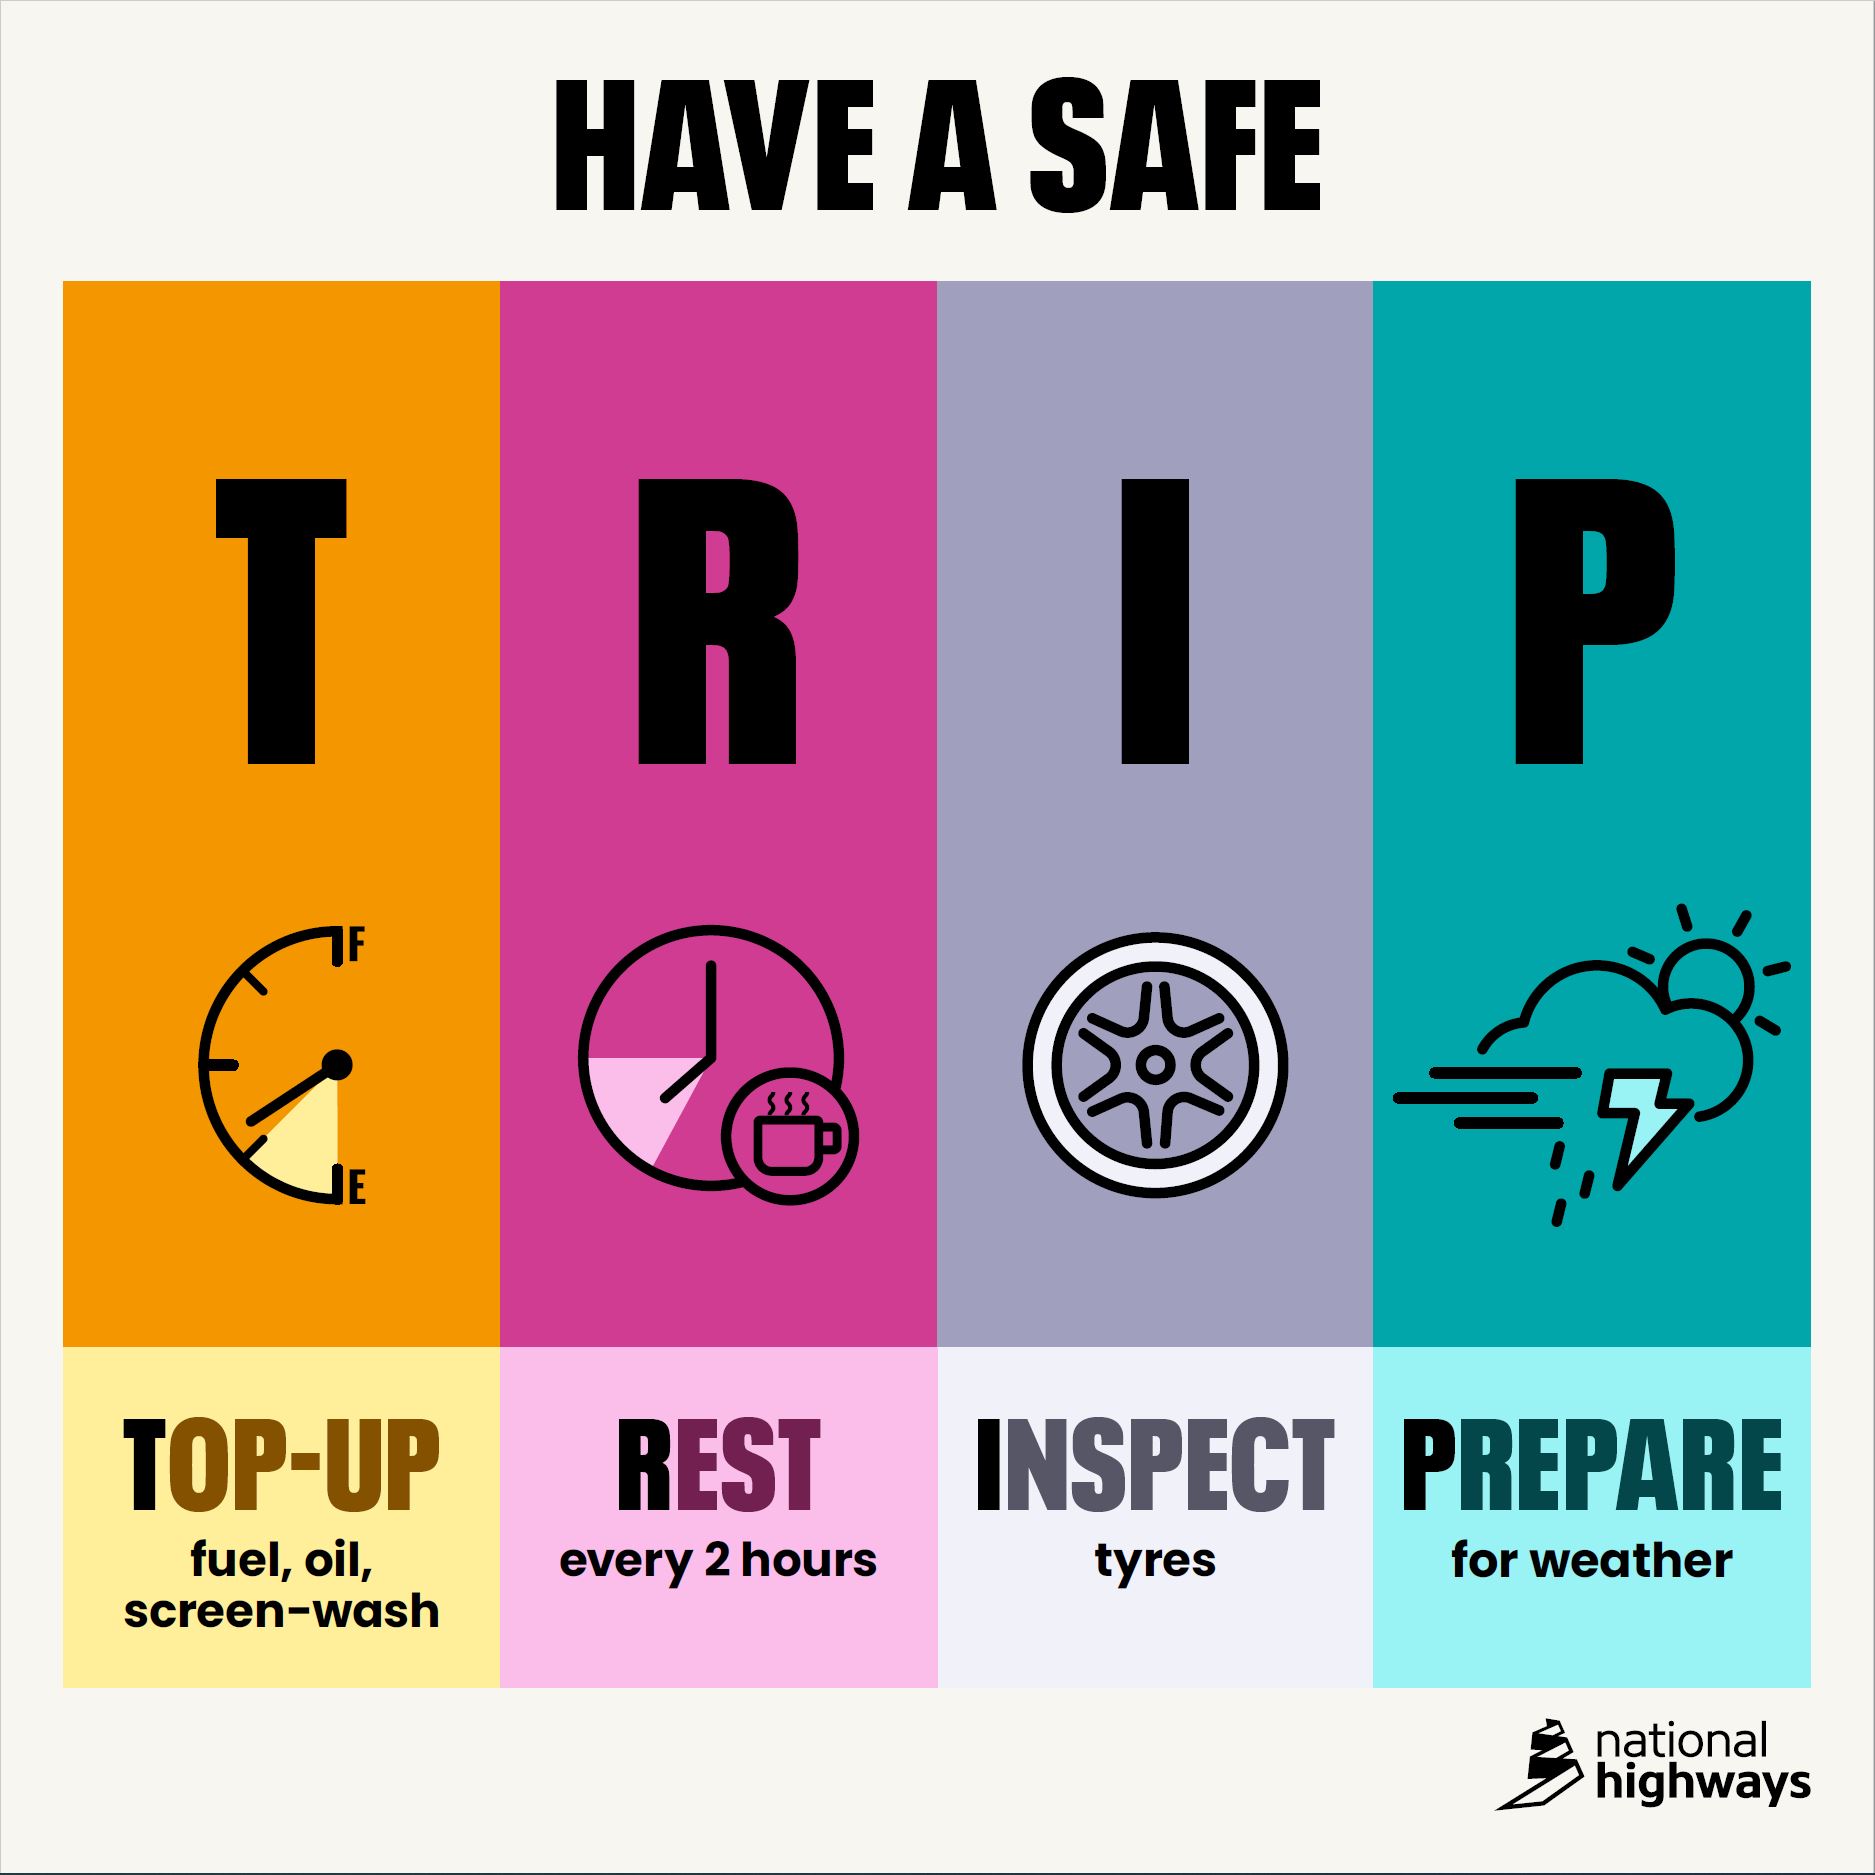 Have a safe TRIP Top-Up Rest Inspect Prepare